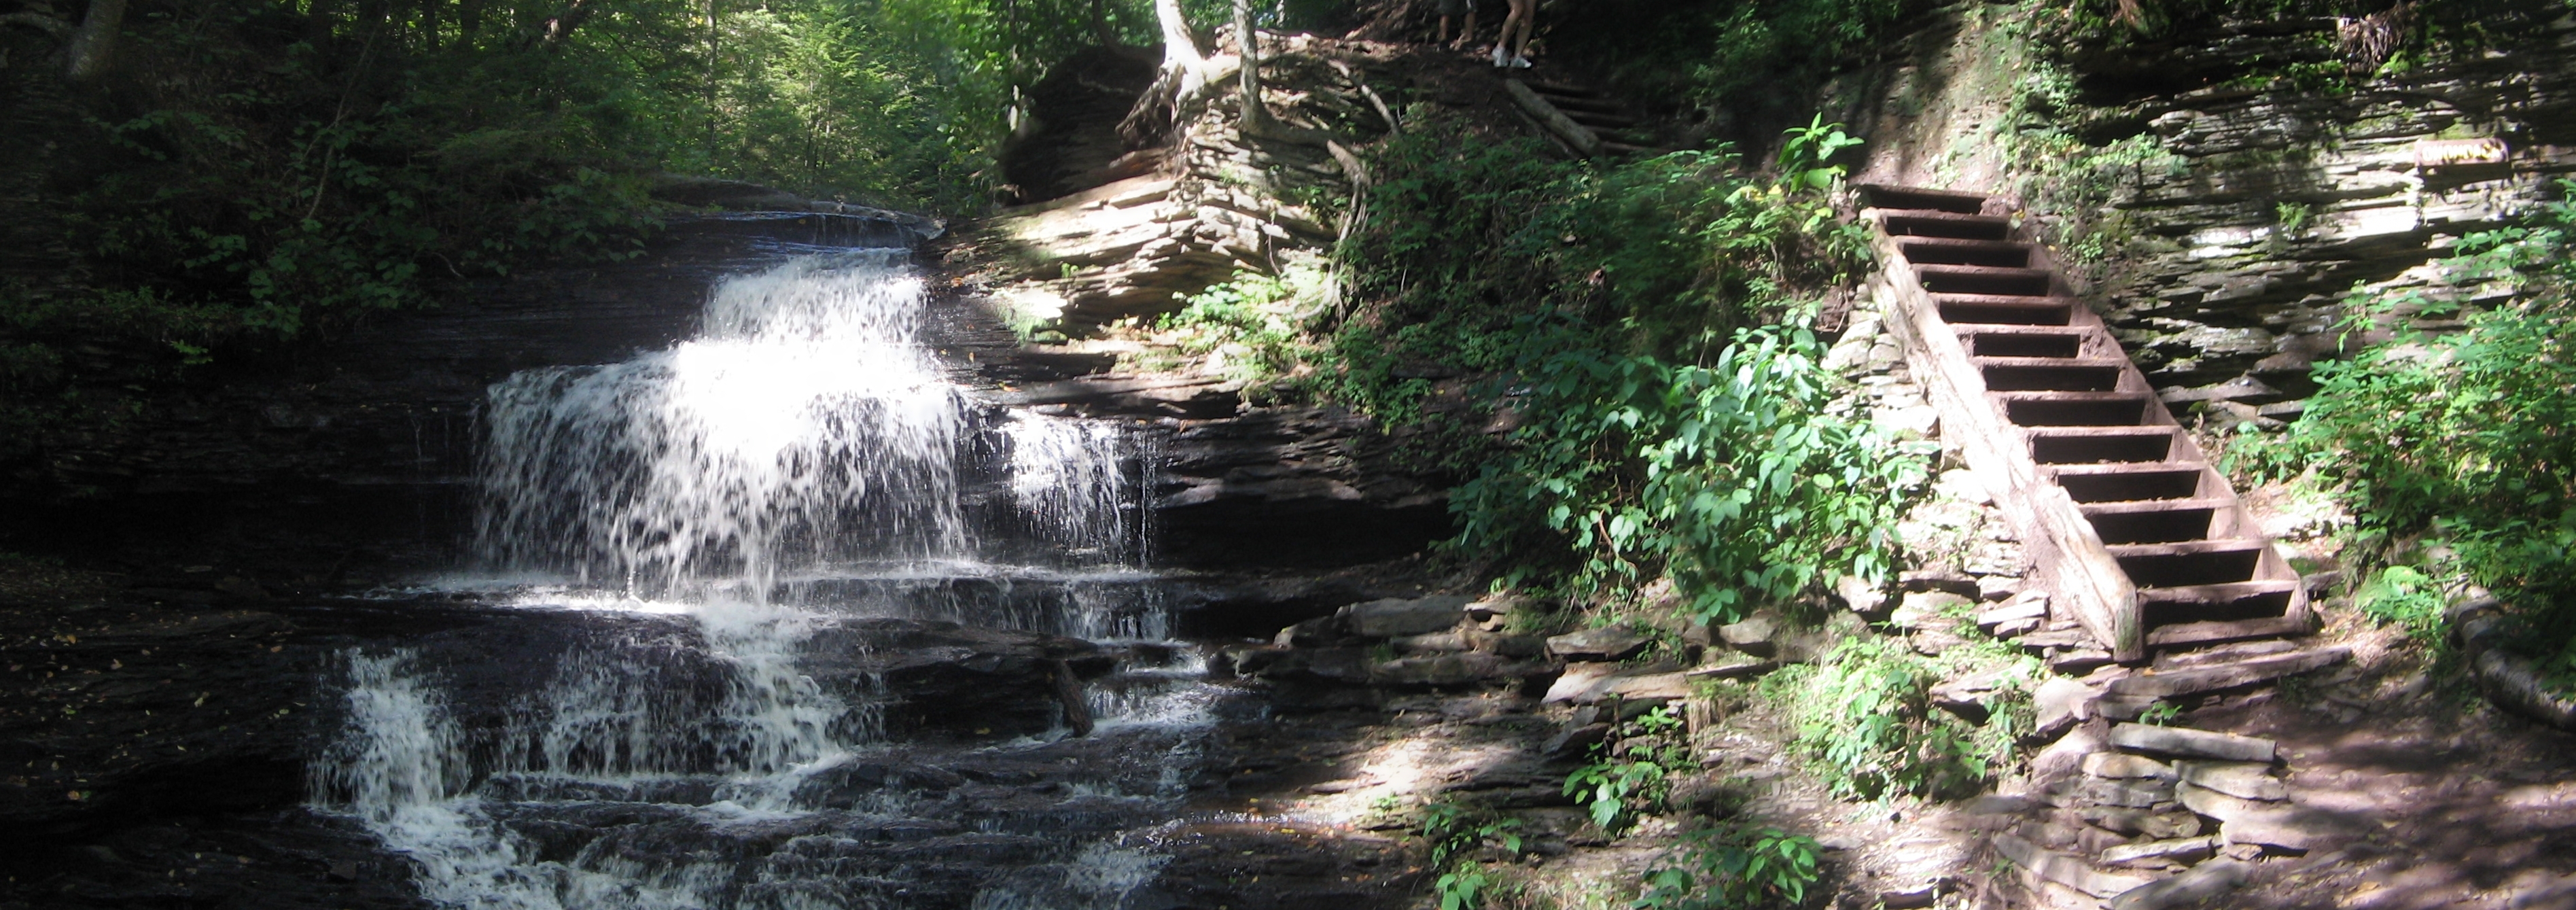 File:Ricketts Glen State Park Onondaga Falls 2.jpg - Wikimedia Commons